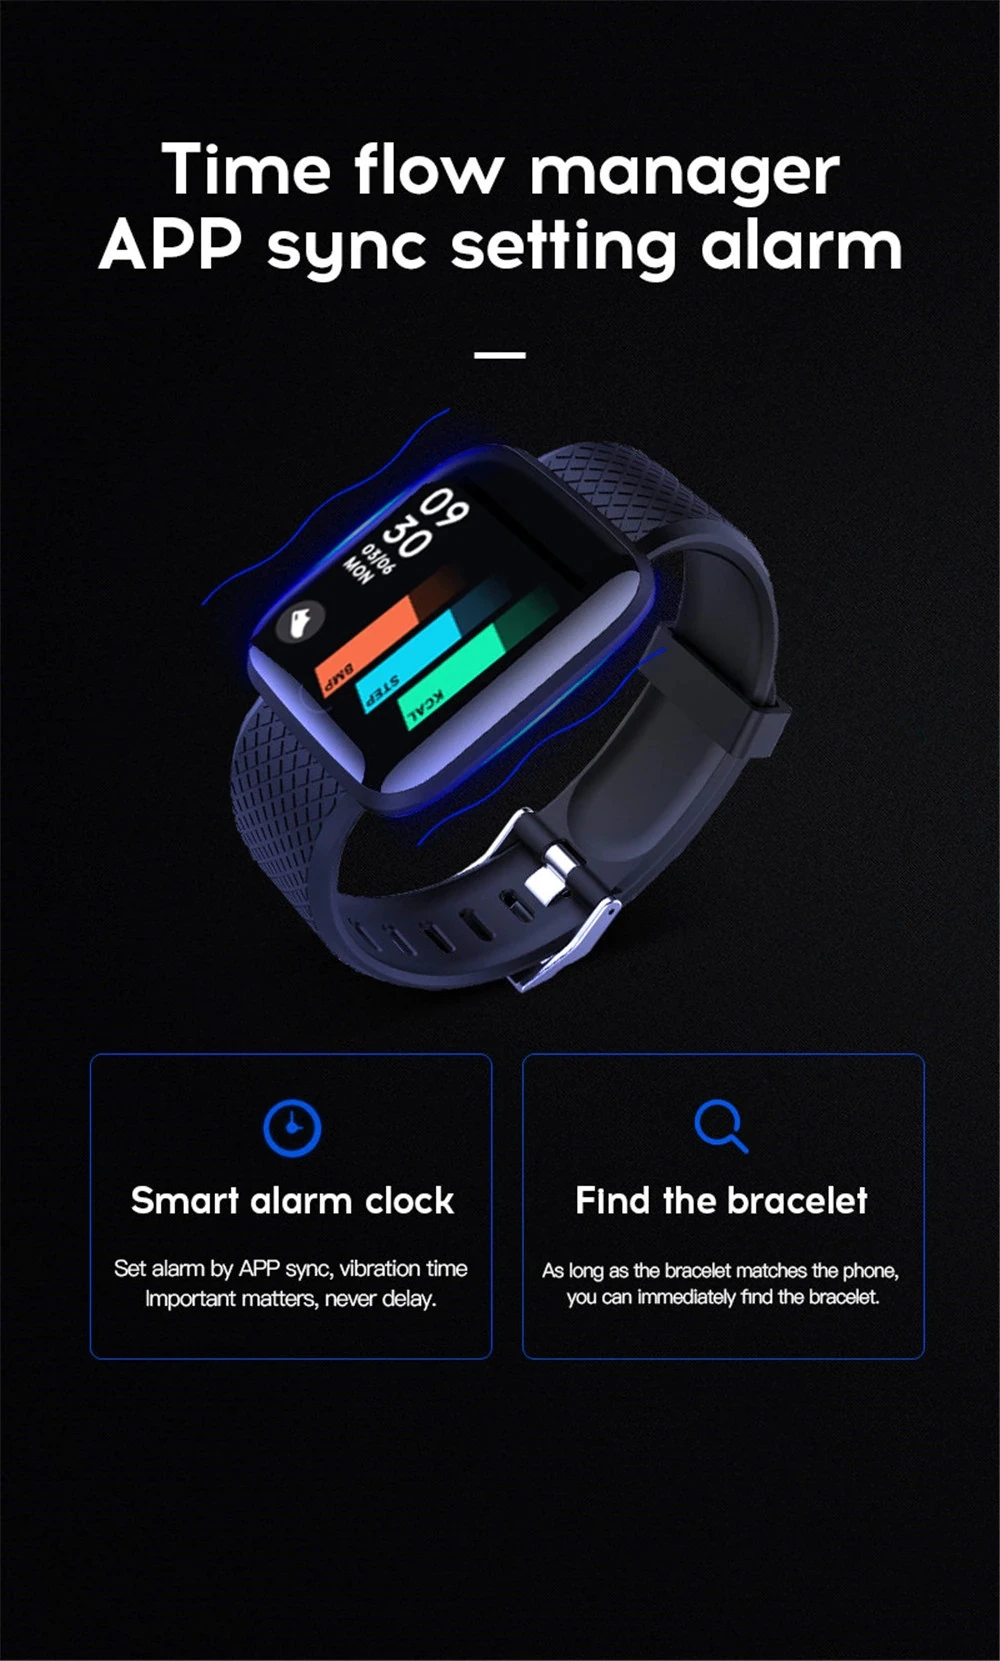 

Newest 116 Plus Smart Bracelet Watch Color Screen Heart Rate Blood Pressure Monitoring Track Movement IP65 Waterproof Pedometers